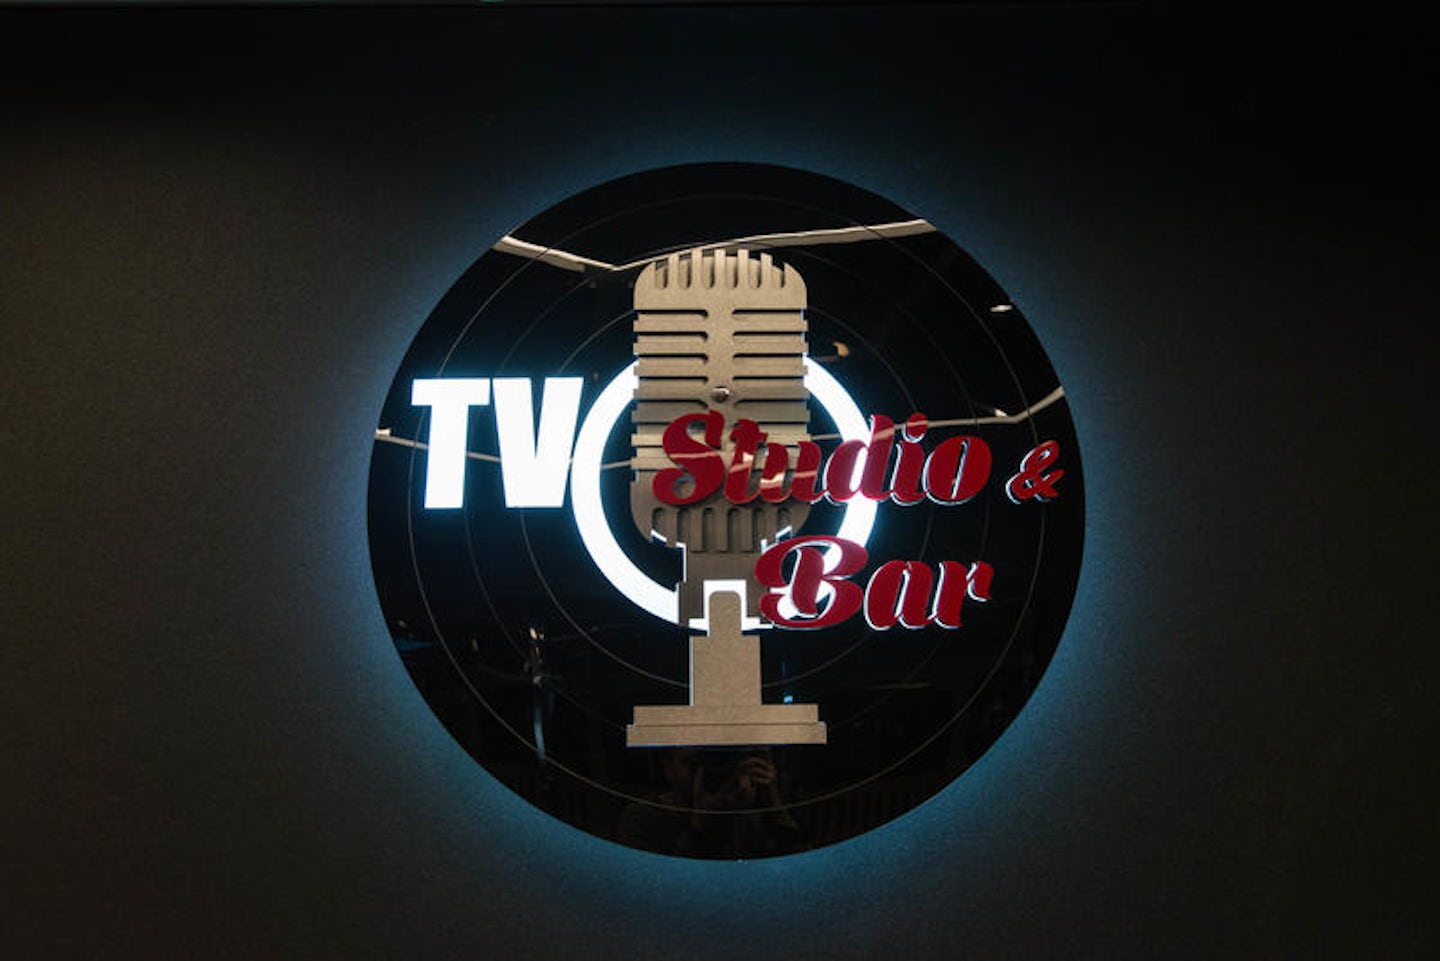 TV Studio & Bar on MSC Meraviglia